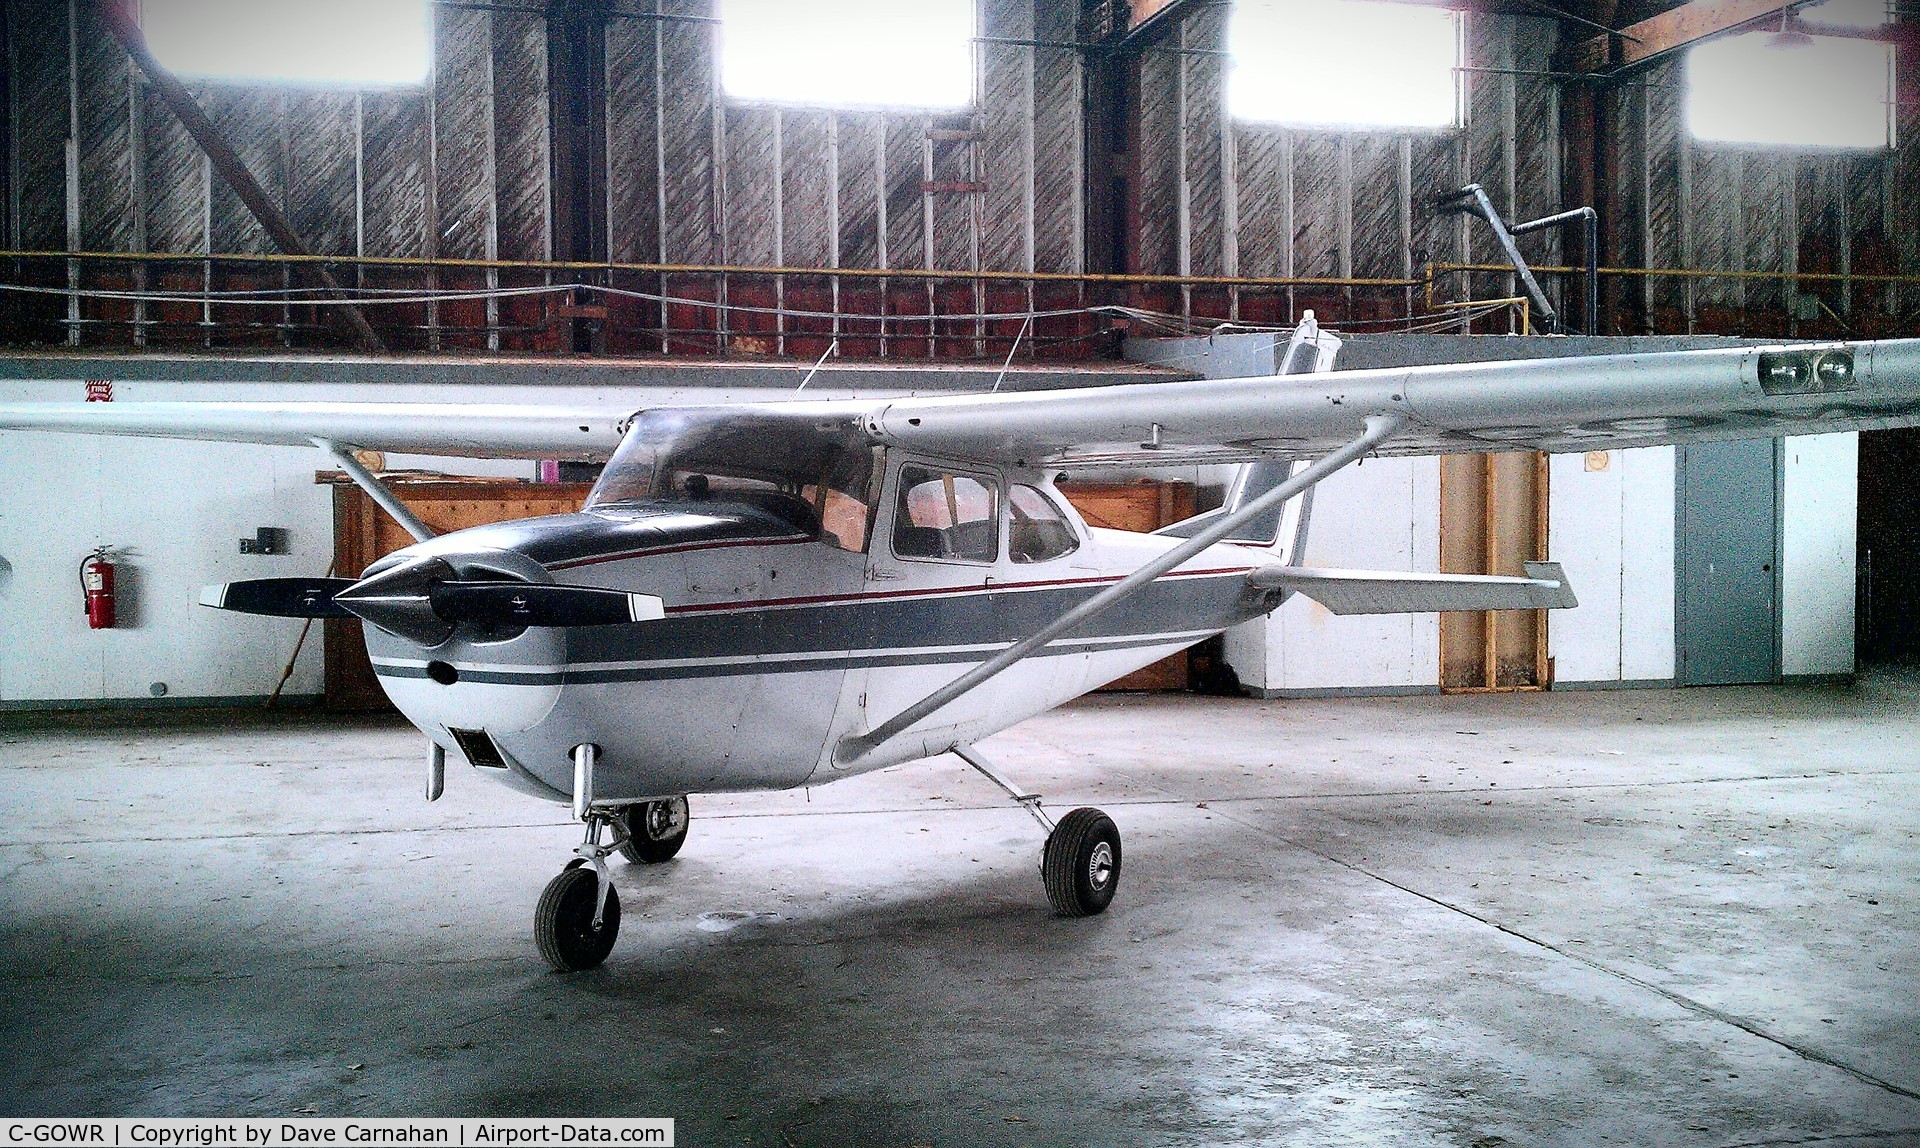 C-GOWR, 1966 Cessna 172G C/N 17253748, C-GOWR in hanger, Deseronto airport